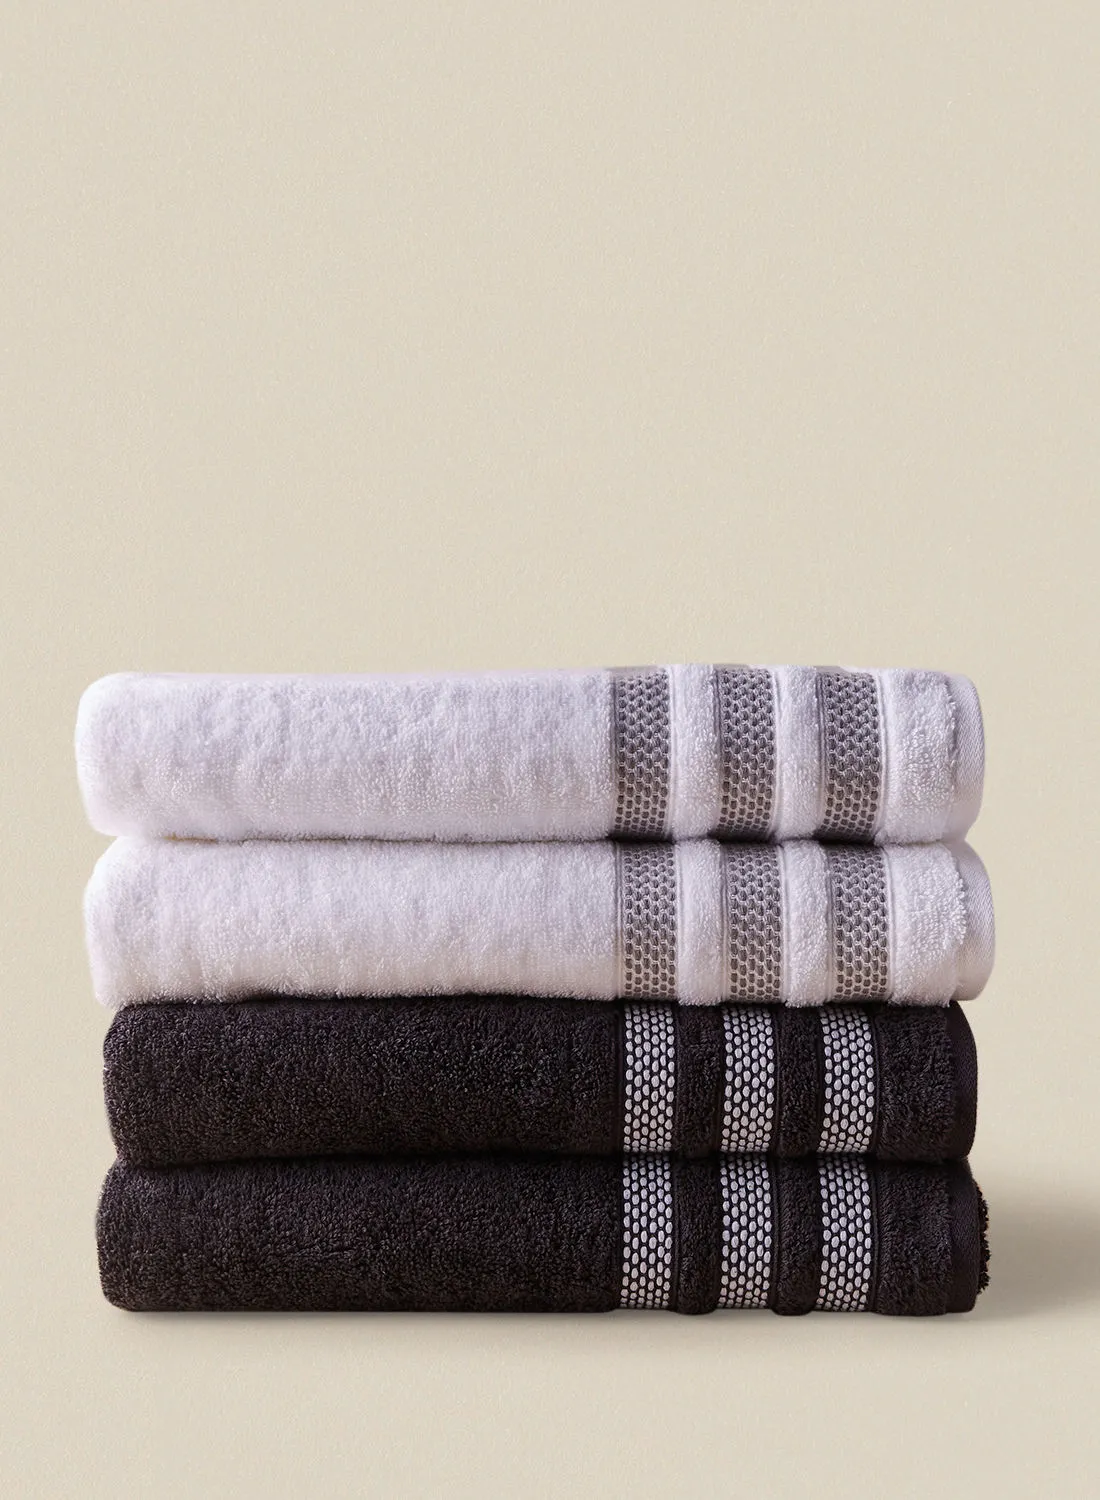 noon east 4 Piece Bathroom Towel Set - 500 GSM 100% Cotton Low Twist - 4 Bath Towel - Multicolor White/Black Color - Highly Absorbent - Fast Dry